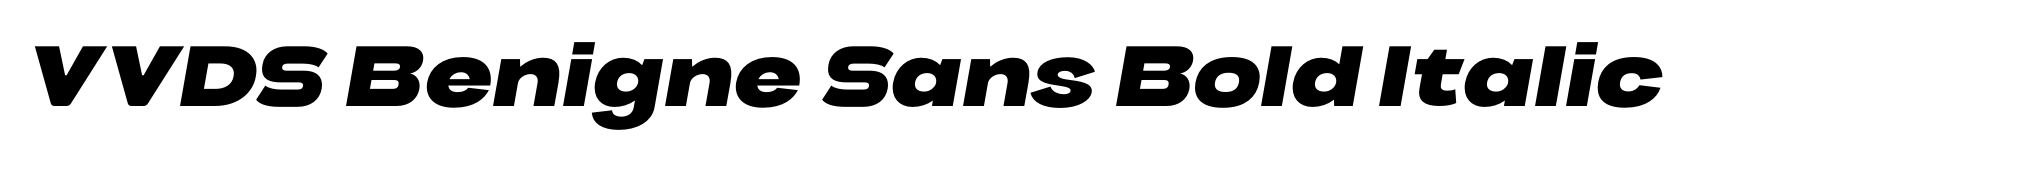 VVDS Benigne Sans Bold Italic image